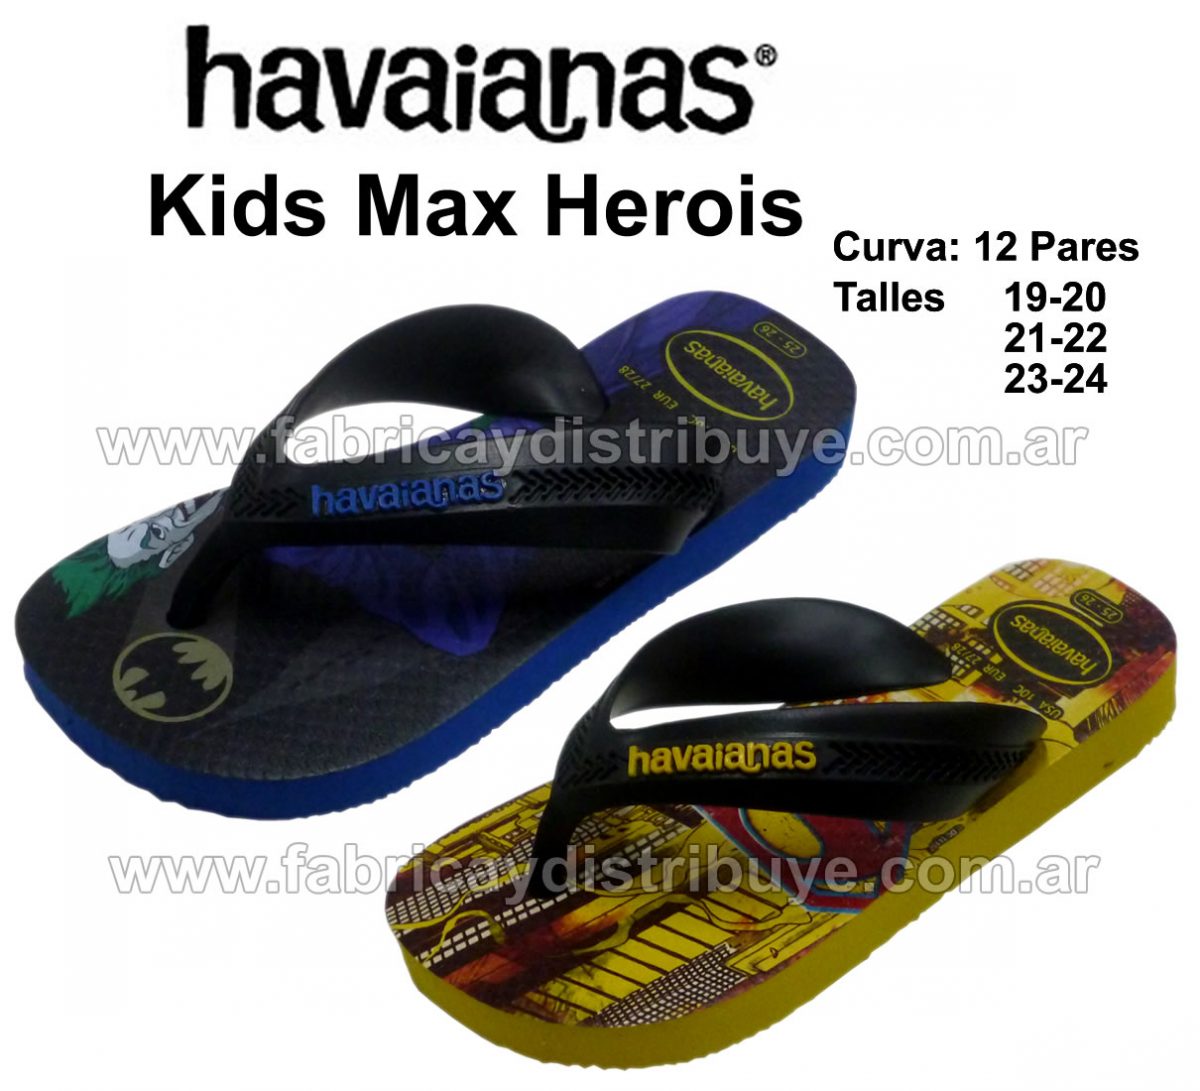 Havaianas Kids Max heroics